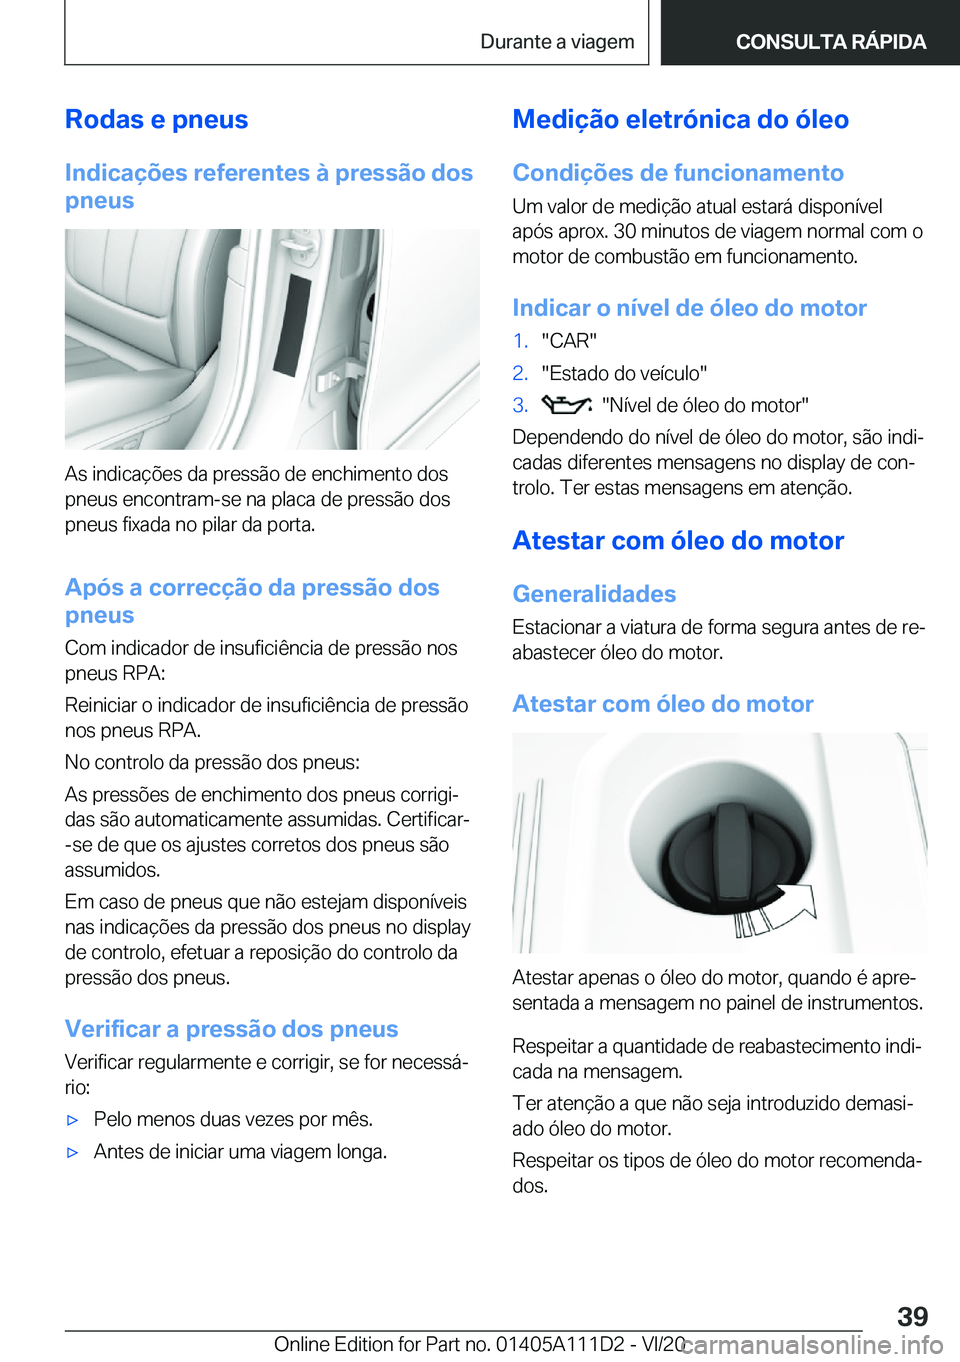 BMW 3 SERIES SEDAN PLUG-IN HYBRID 2021  Manual do condutor (in Portuguese) �R�o�d�a�s��e��p�n�e�u�s
�I�n�d�i�c�a�